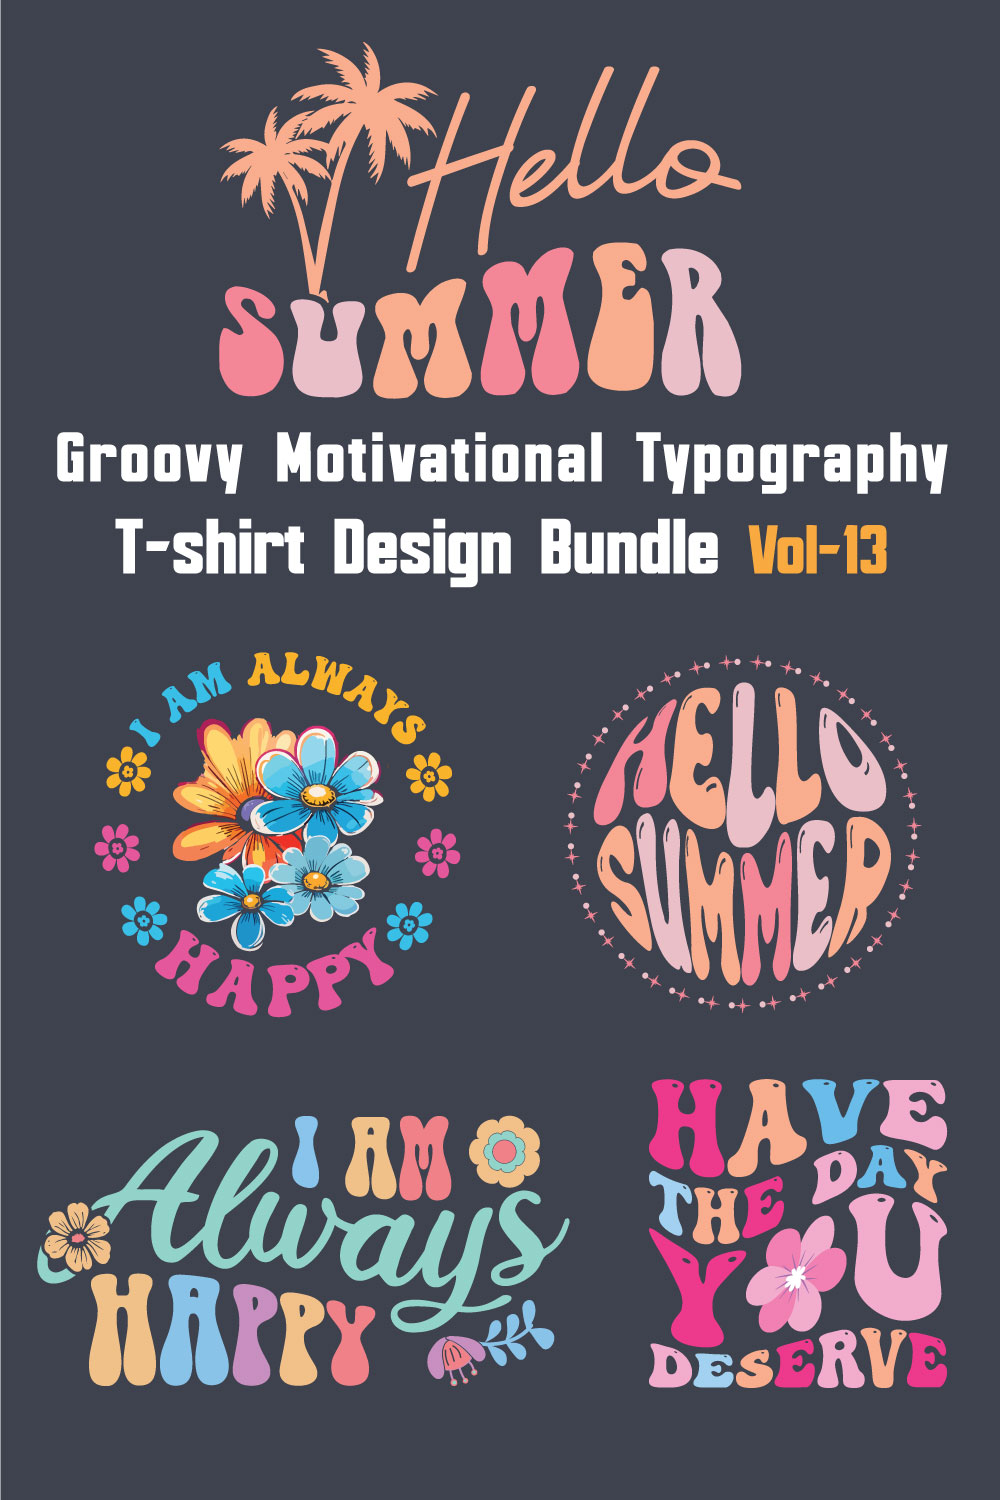 Groovy Motivational Typography T-shirt Design Bundle Vol-13 pinterest preview image.